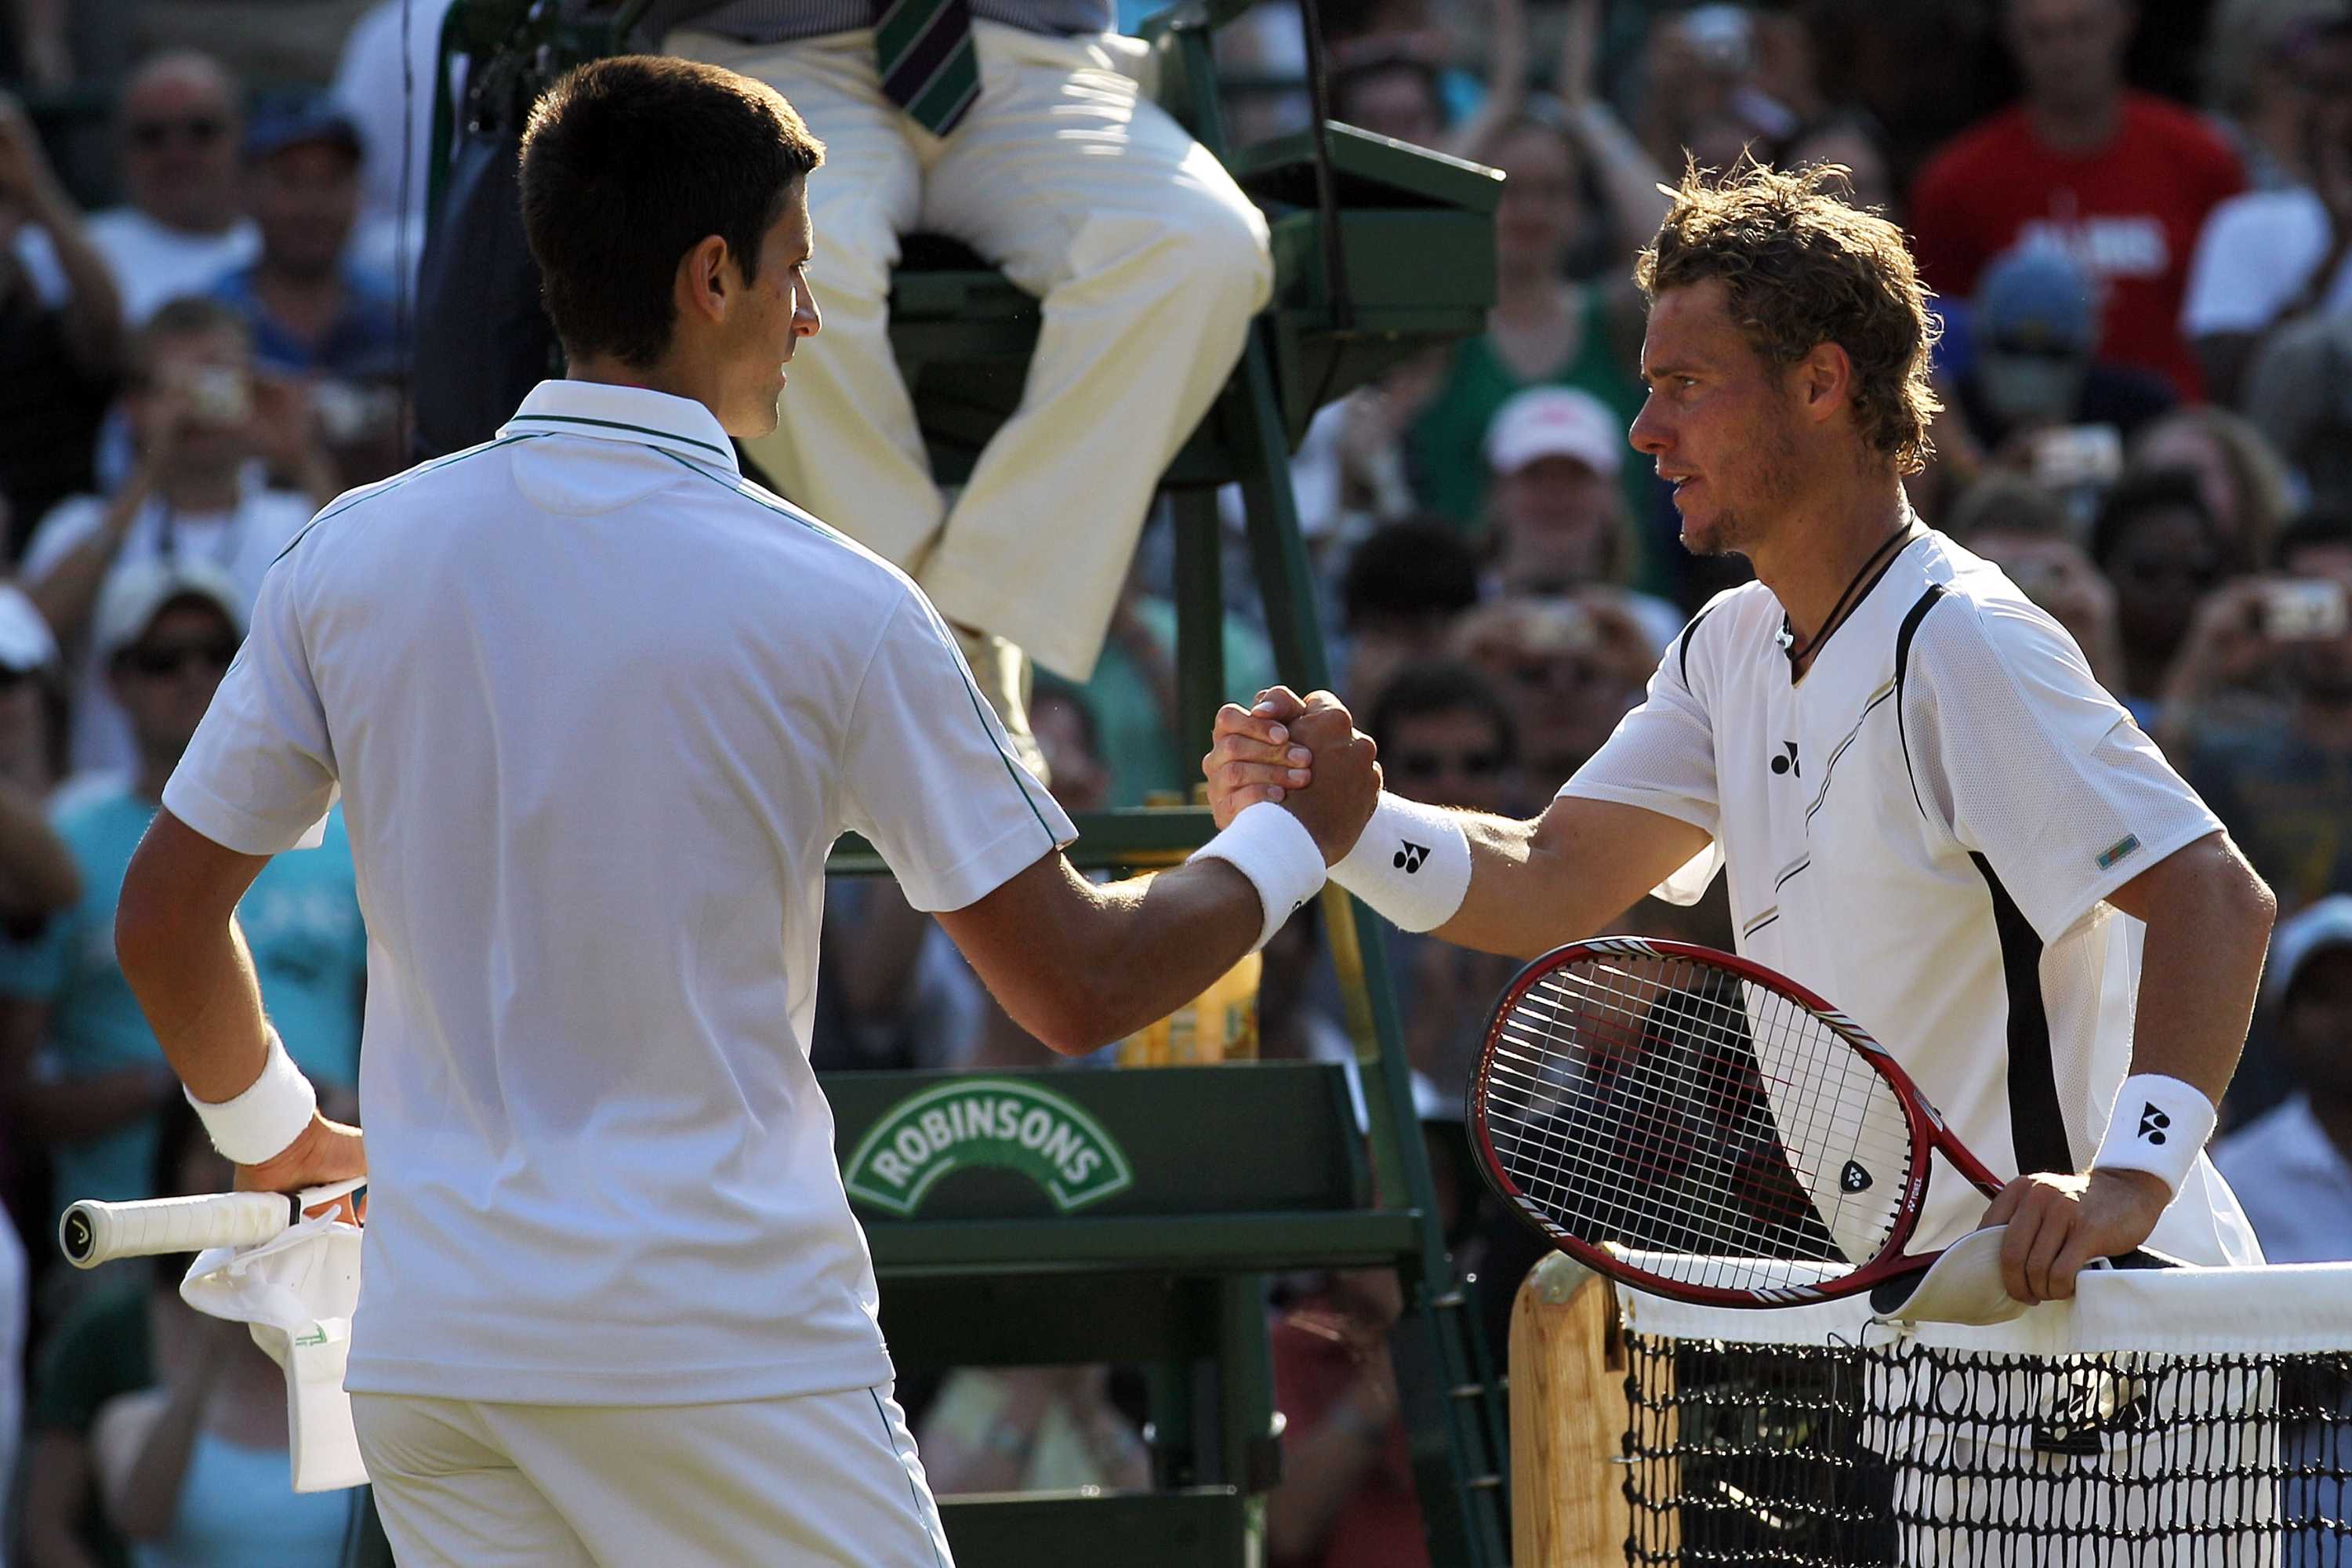 Novak Djokovic shakes hands with Lleyton Hewitt after winning their match at Wimbledon in June 2010.